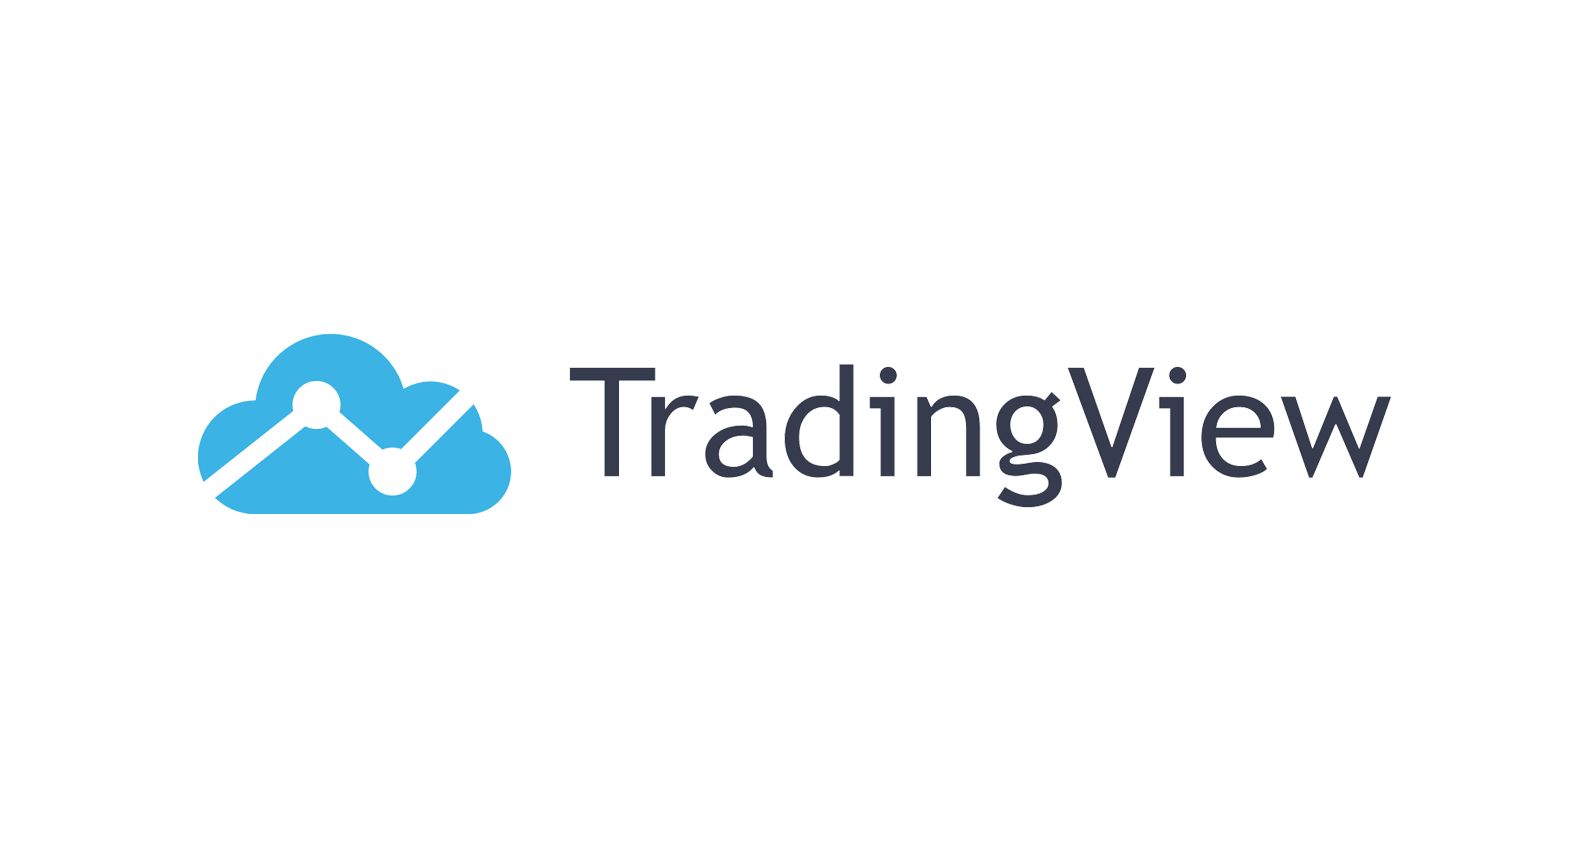 Trading view com русская версия. TRADINGVIEW. TRADINGVIEW лого. Трейдинг Вью логотип. TRADINGVIEW новый логотип.